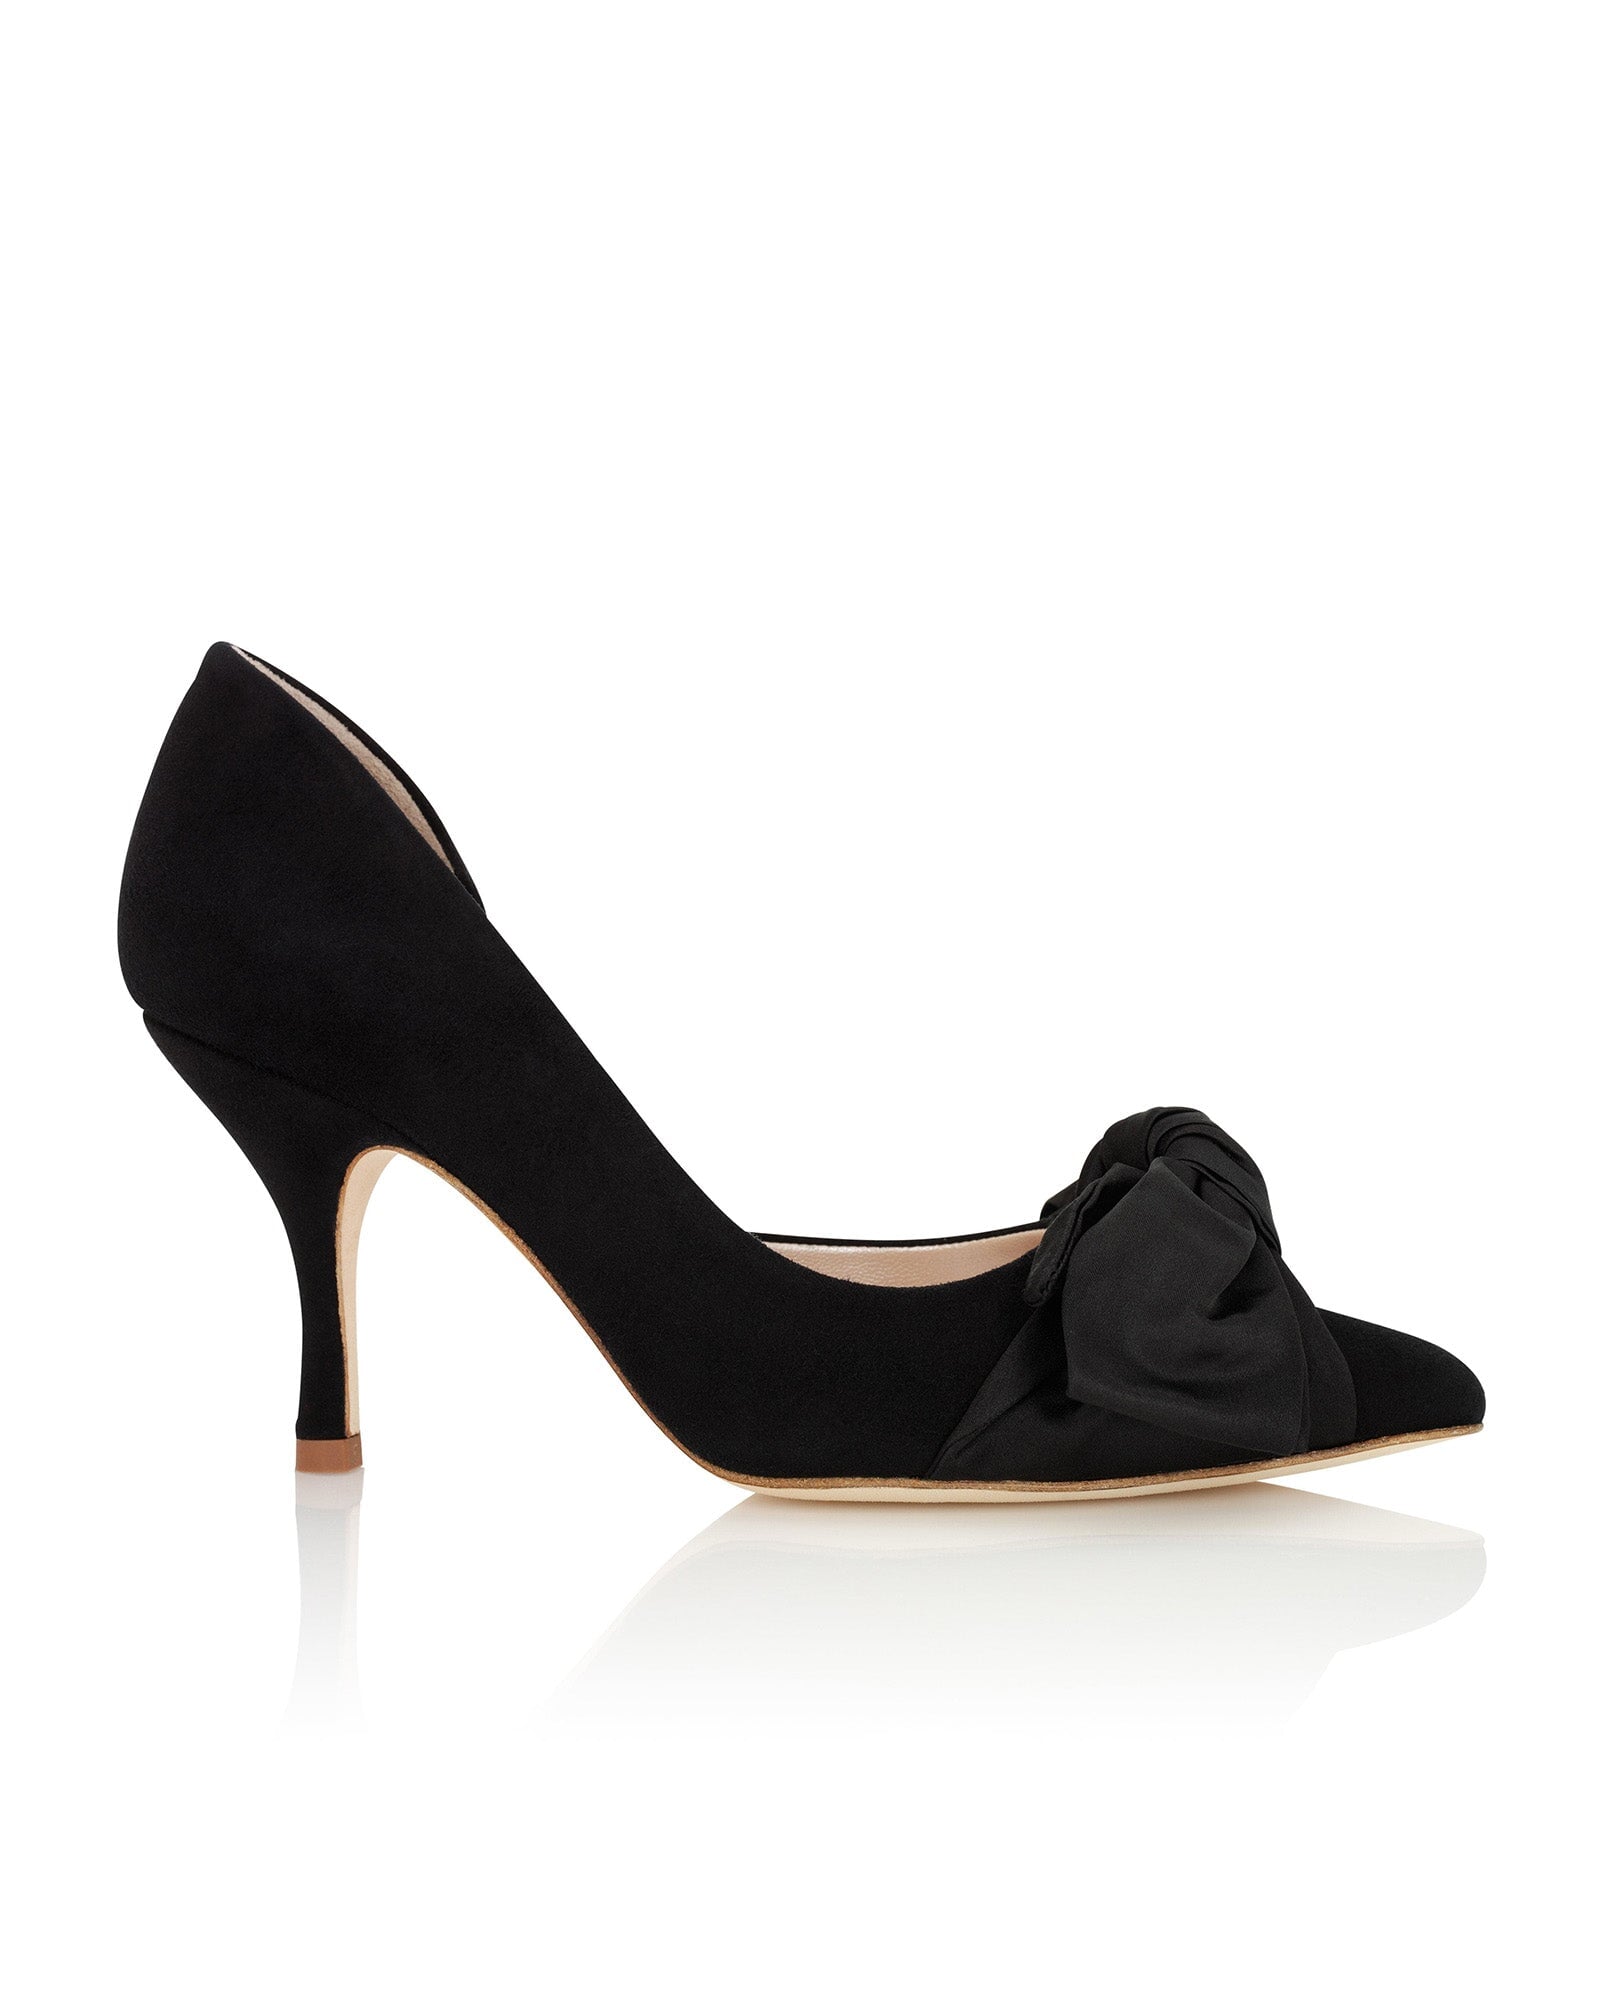 Florence Jet Black Mid Fashion Shoe Black Suede Court Shoe with Satin Bow  image